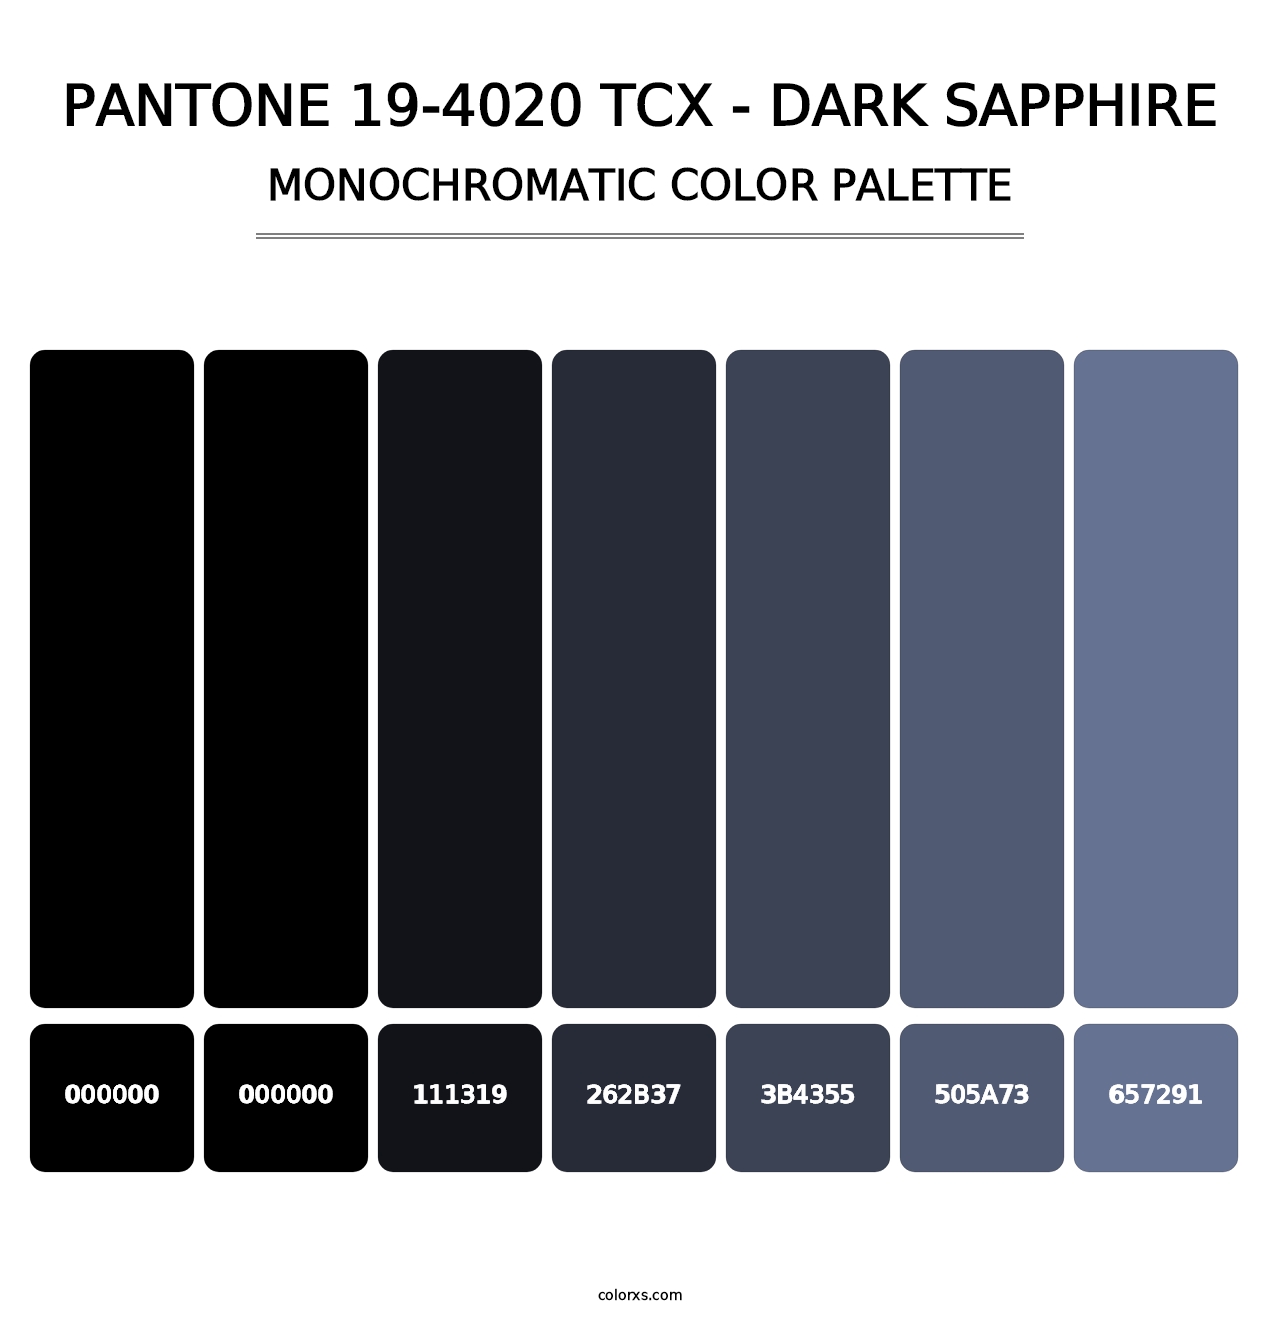 PANTONE 19-4020 TCX - Dark Sapphire - Monochromatic Color Palette